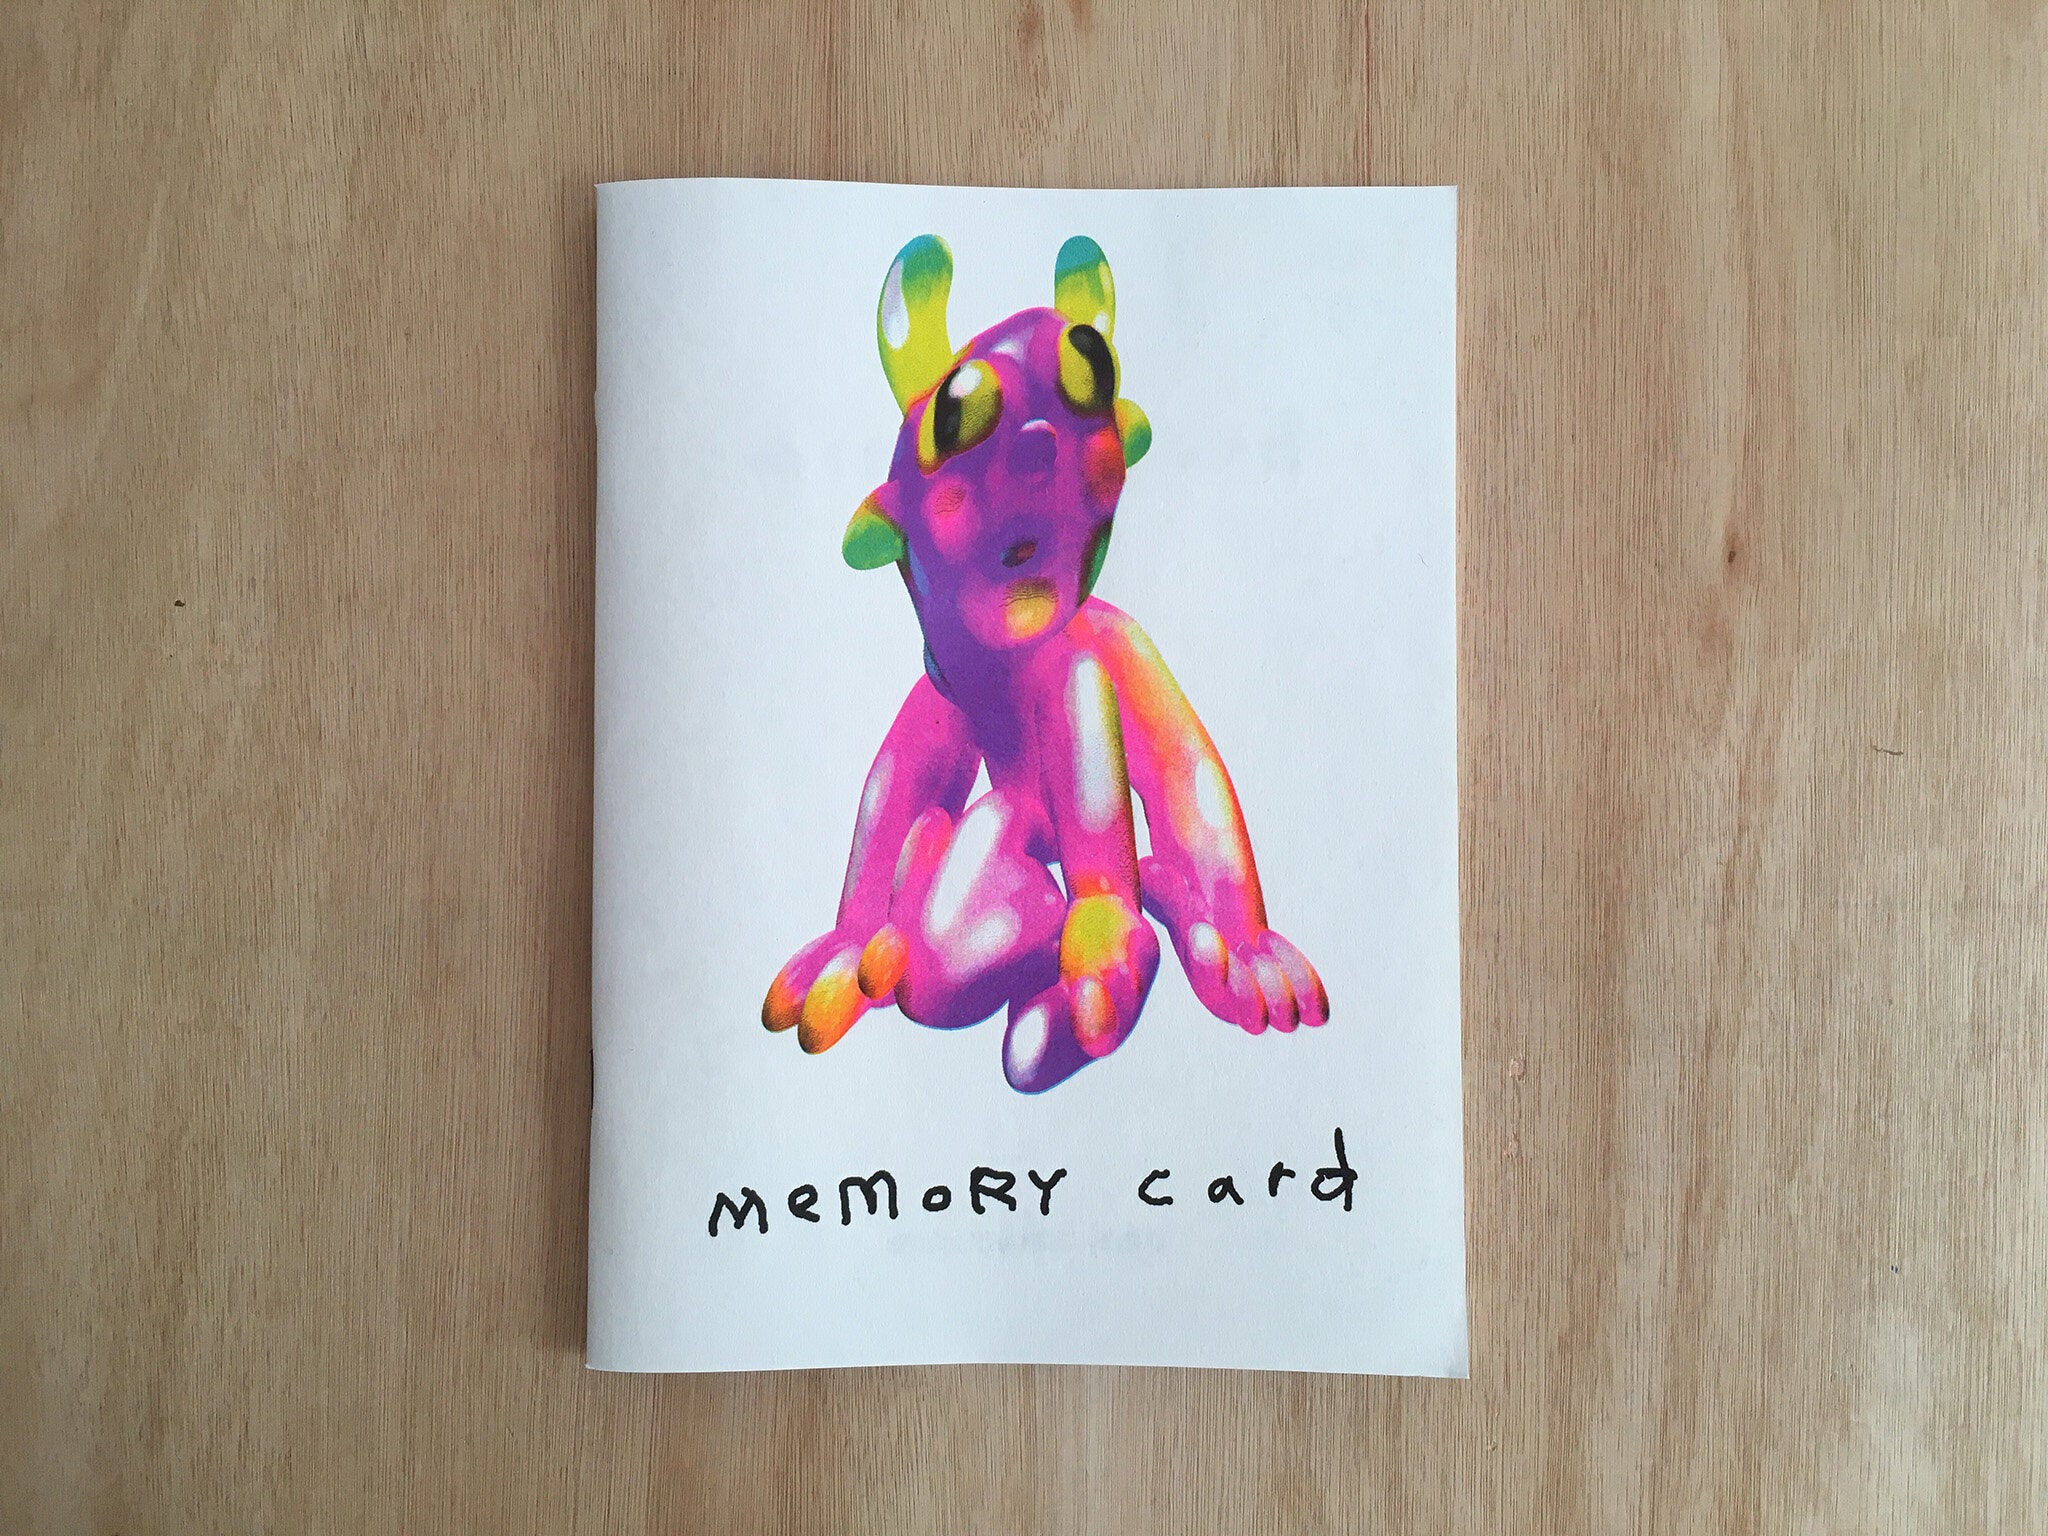 MEMORY CARD by Sam Bailey